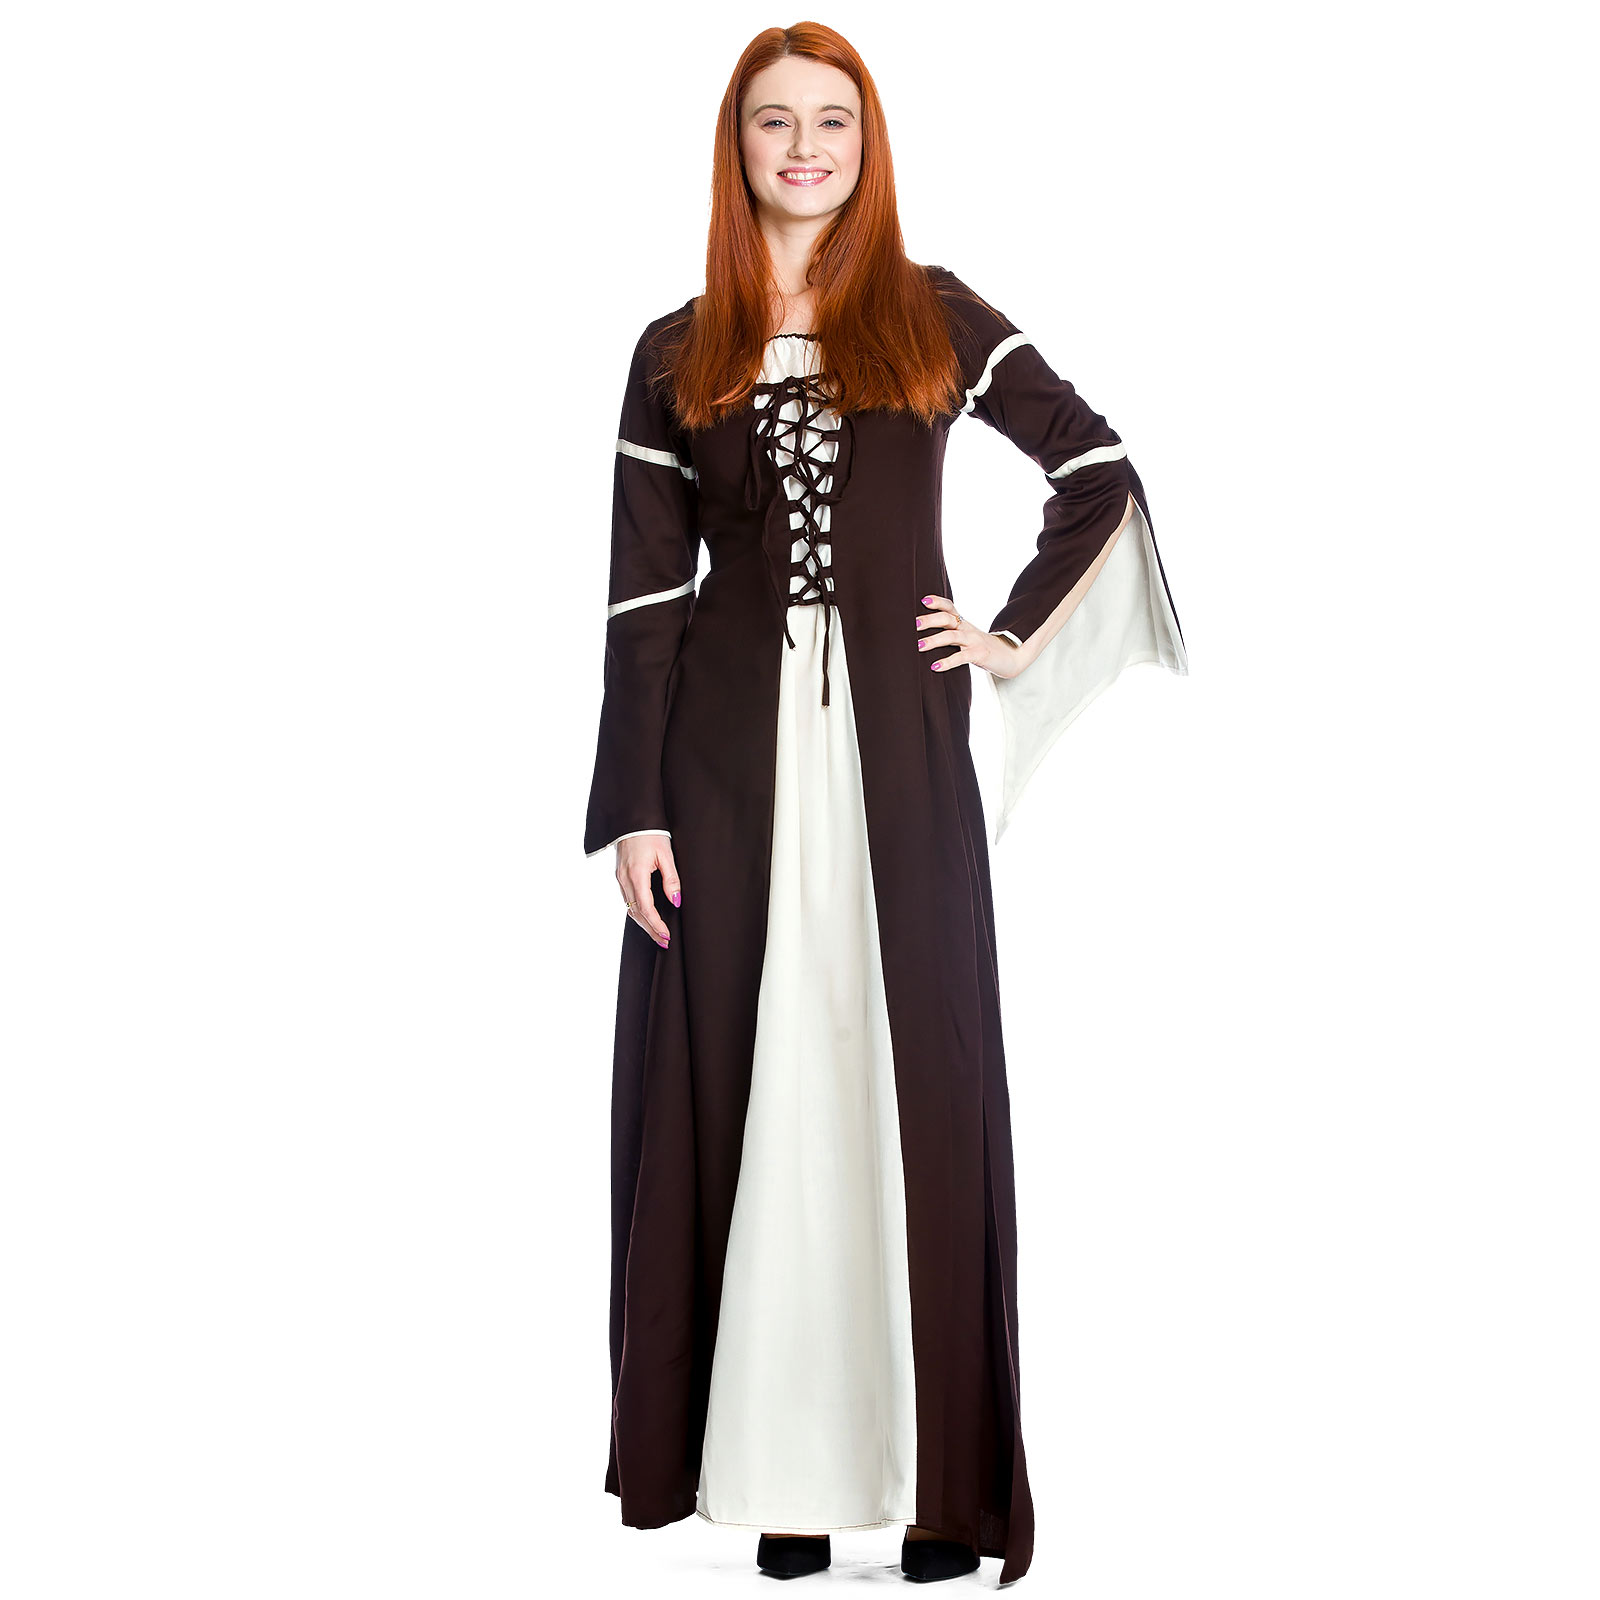 Medieval dress Katherina brown-nature